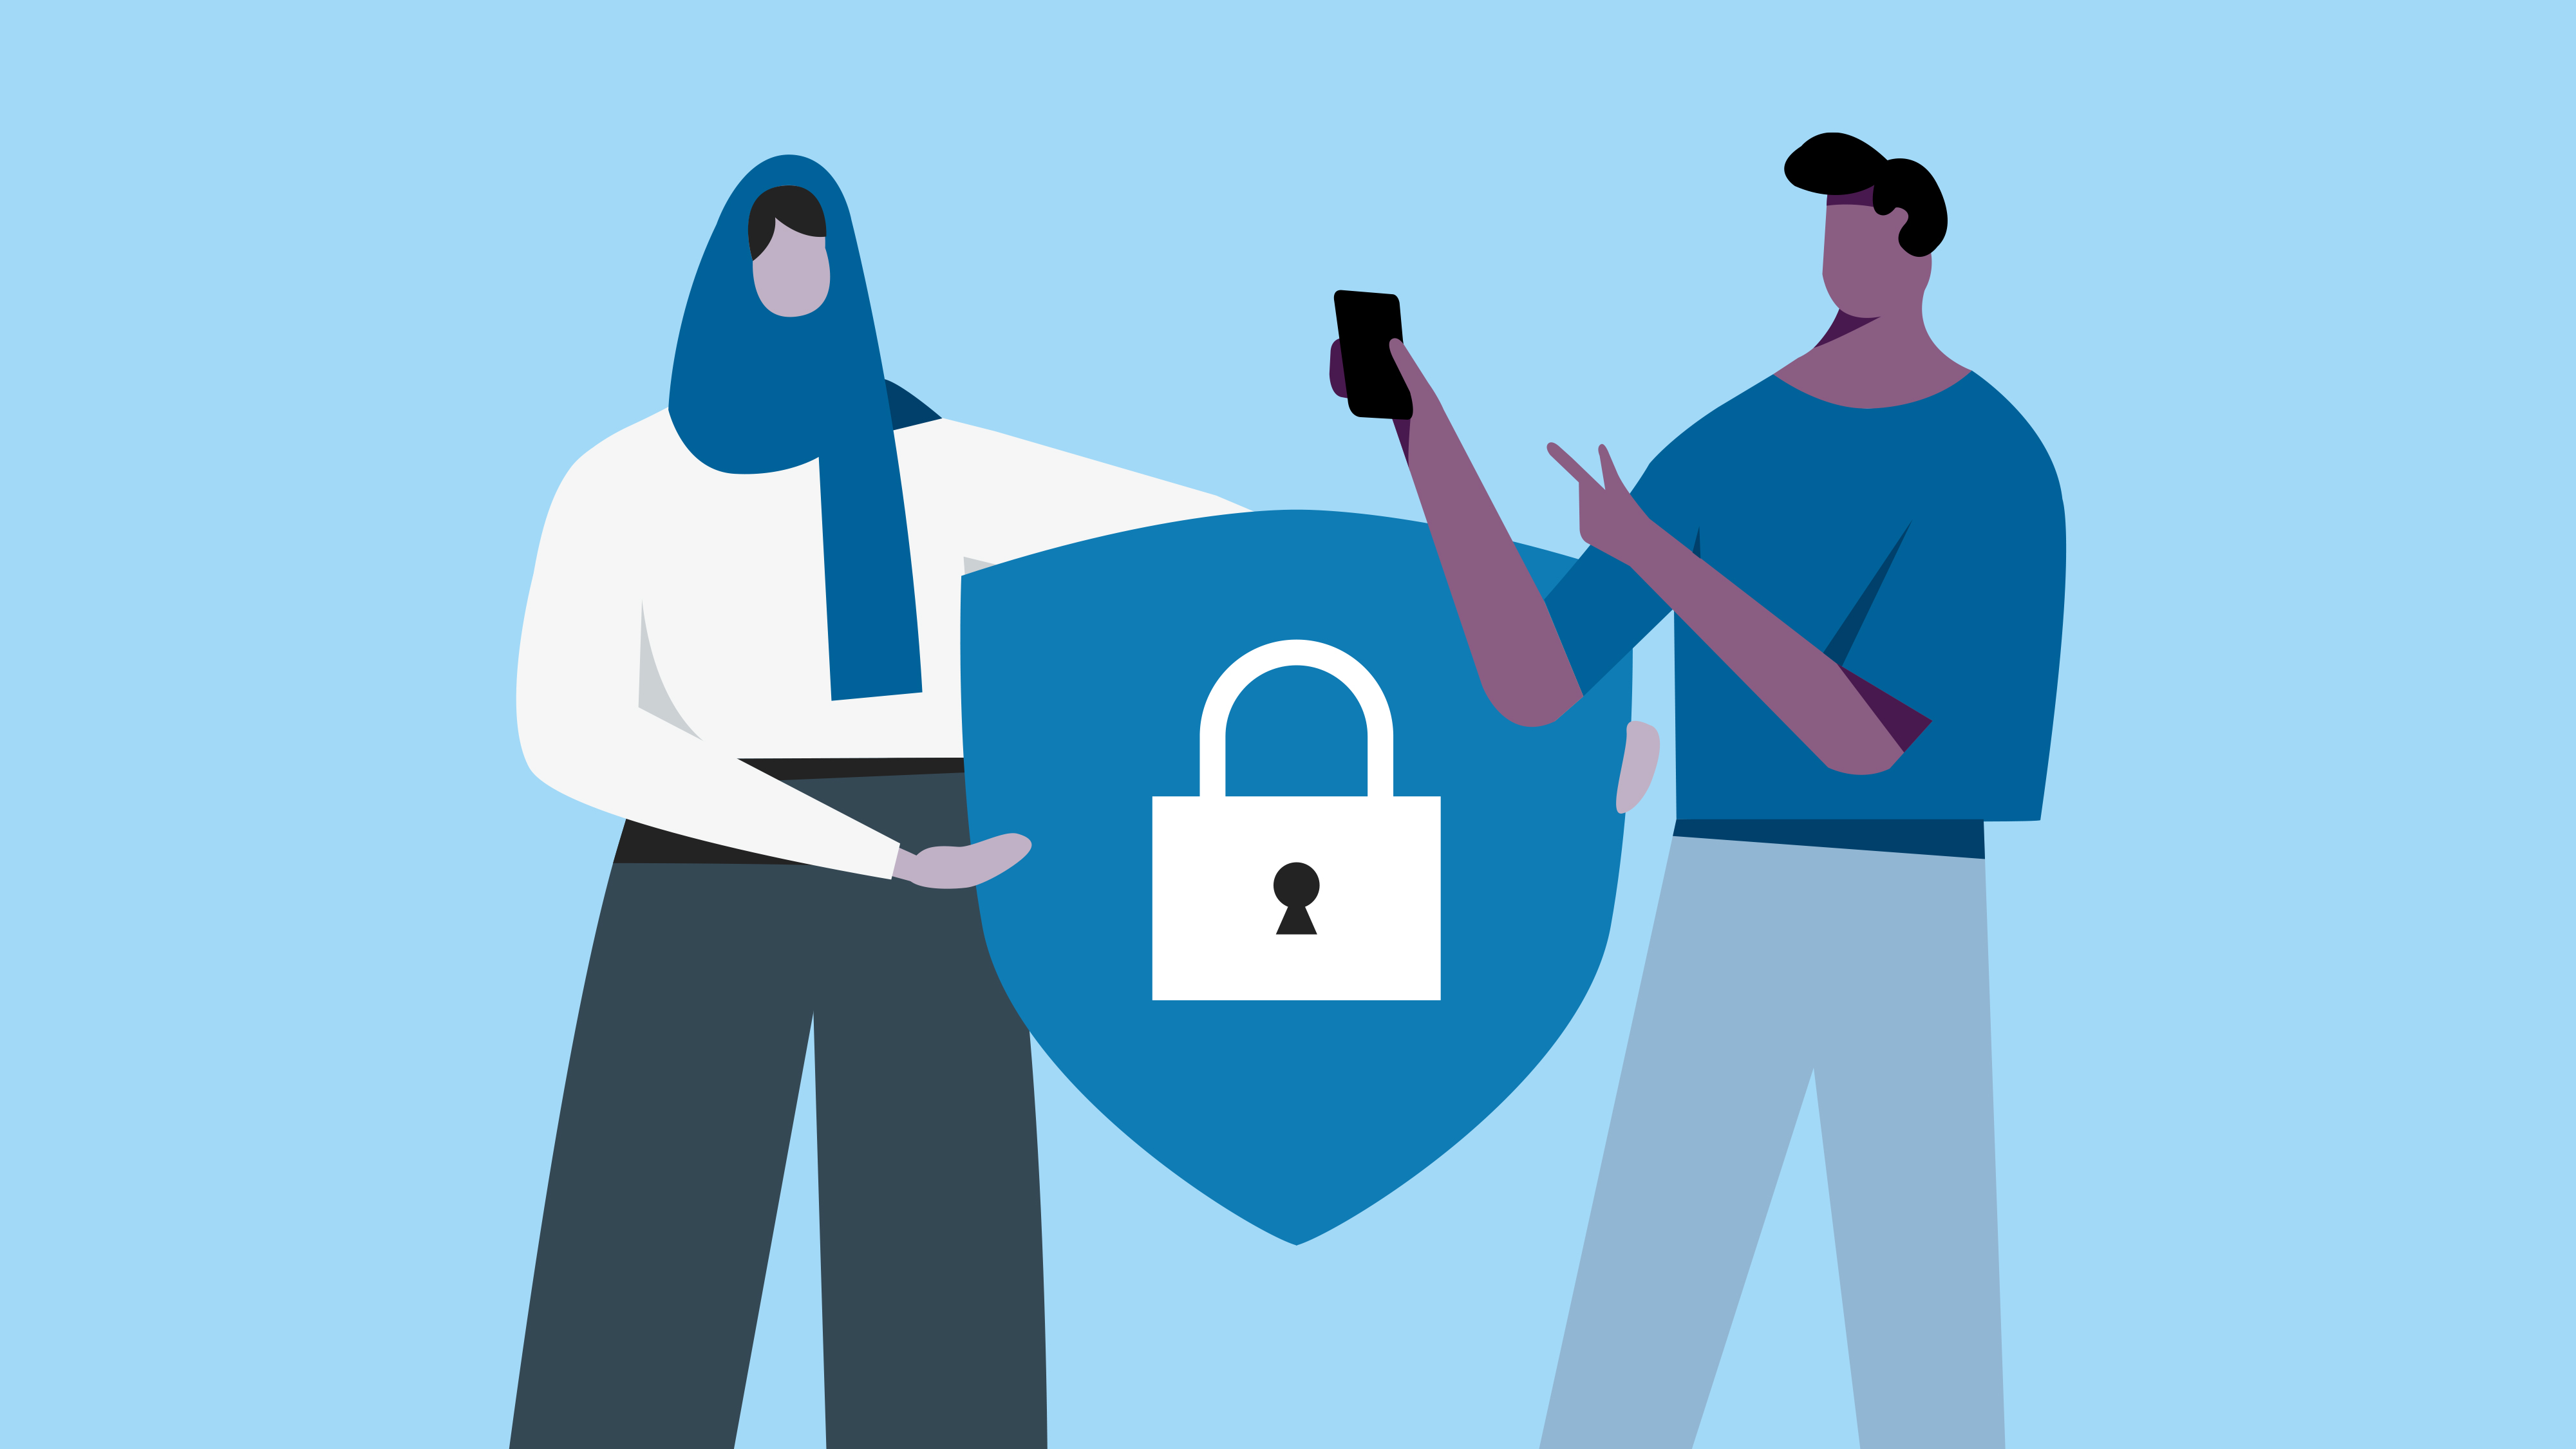 Privacy illustration